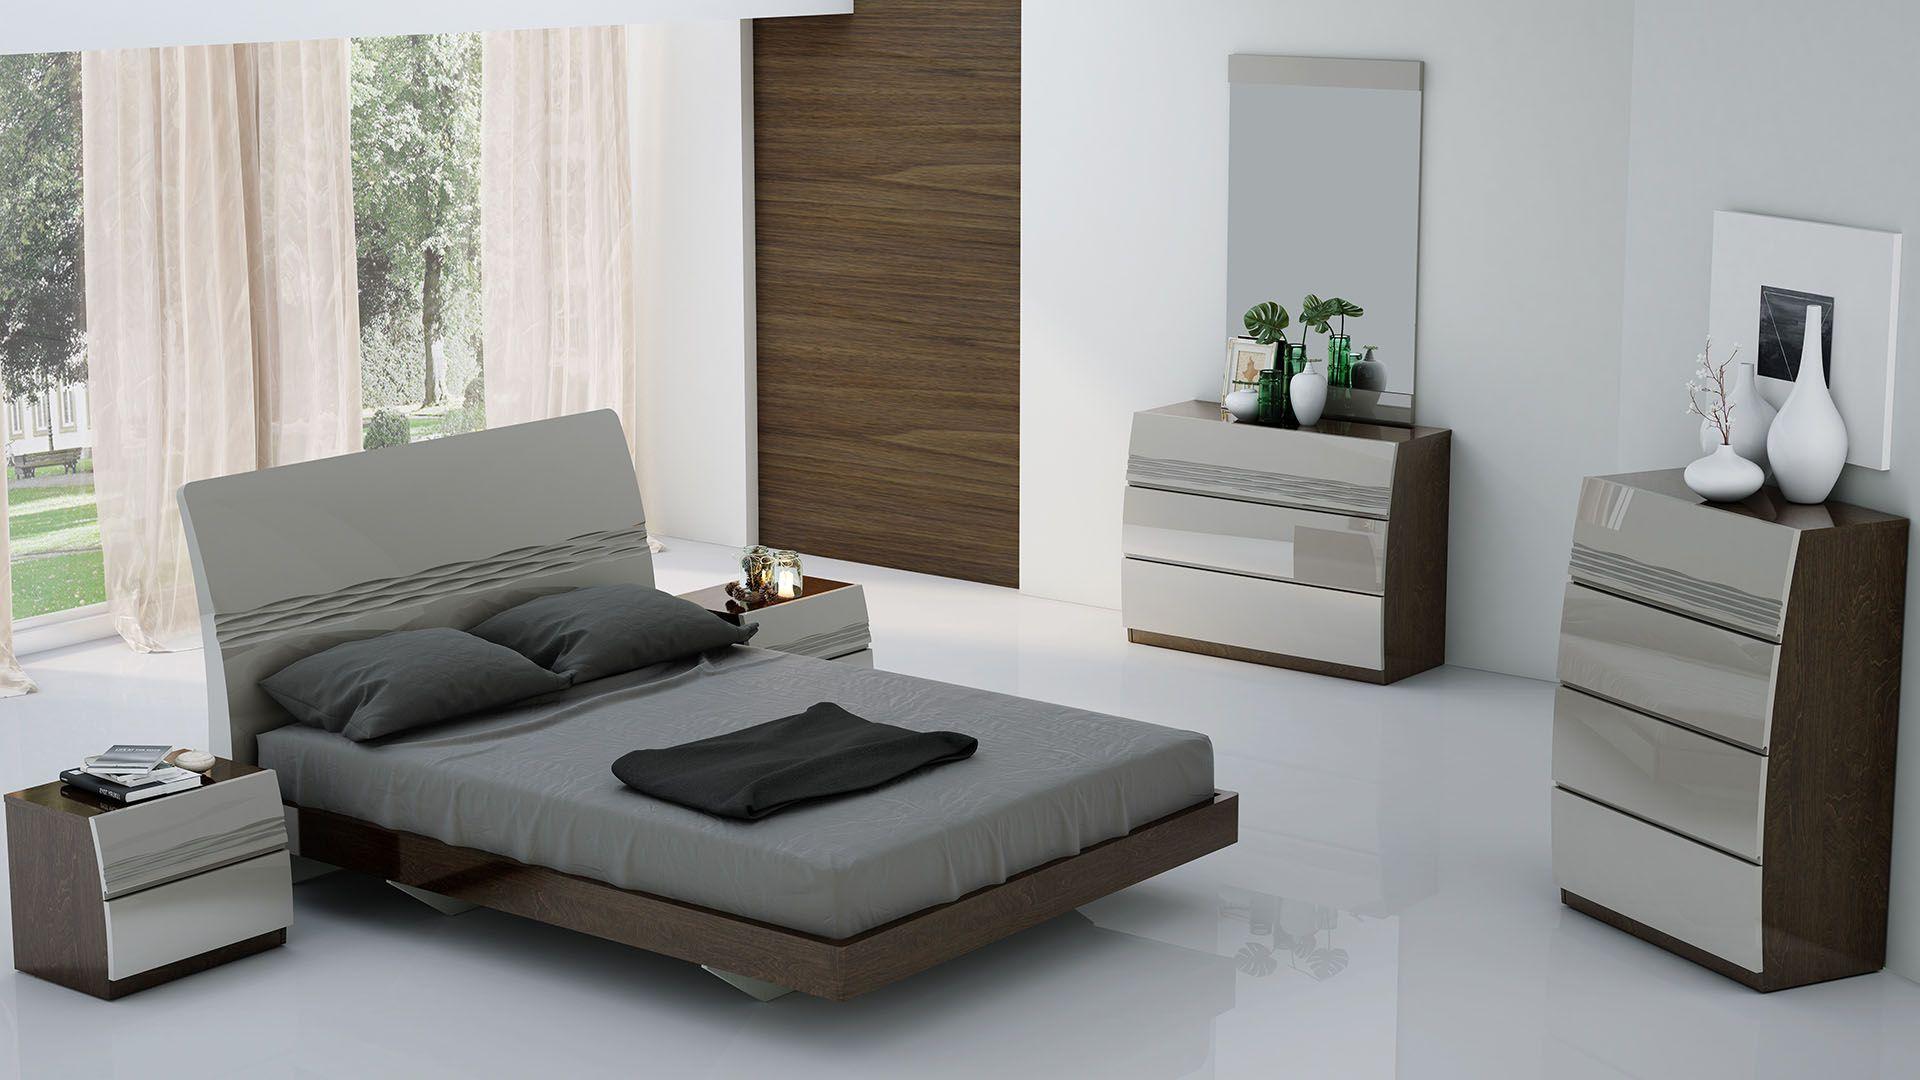 

                    
American Eagle Furniture B-P102-EK Platform Bedroom Set Brown/Light Gray  Purchase 
